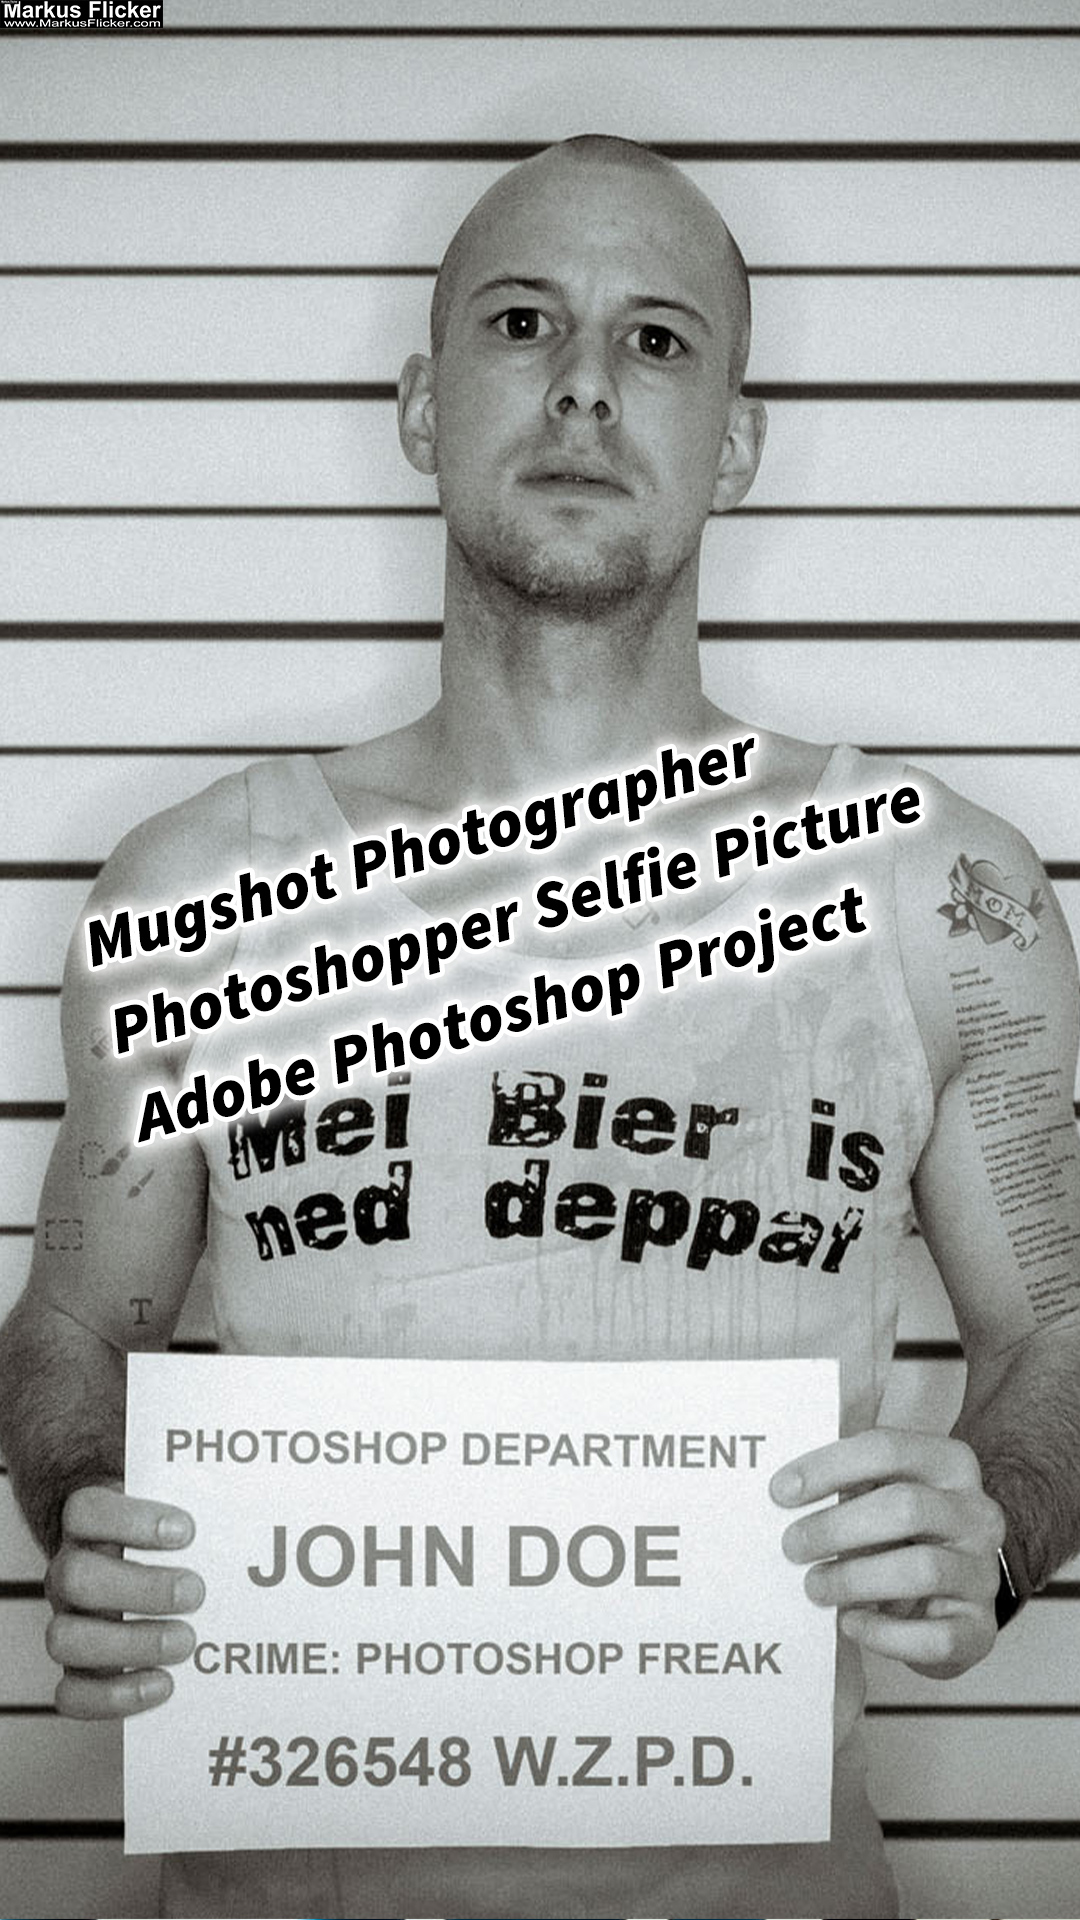 Mugshot Photographer Photoshopper Selfie Picture ;) Adobe Photoshop Project